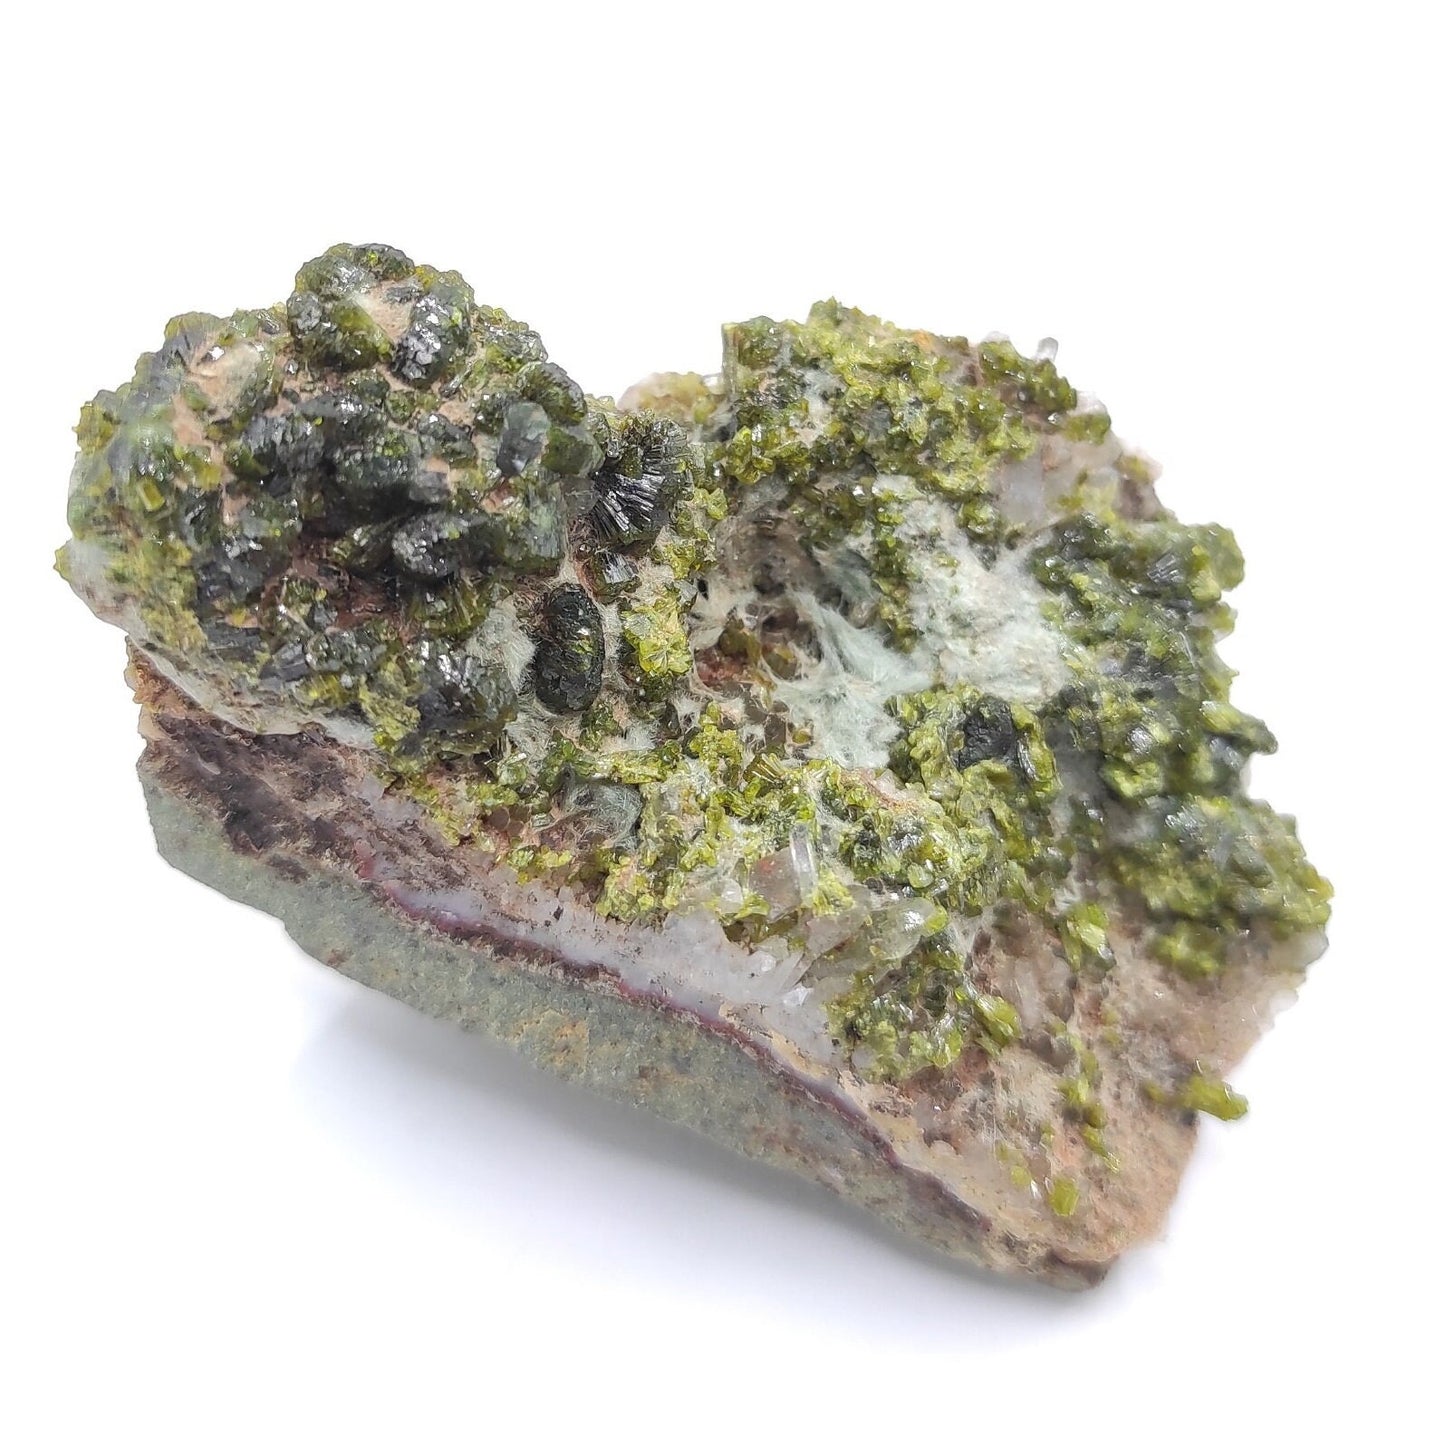 104g Epidote with Quartz - Imilchil, Morocco - Green Epidote Crystal Cluster - Raw Mineral Specimen - Green Epidote and Quartz Crystal